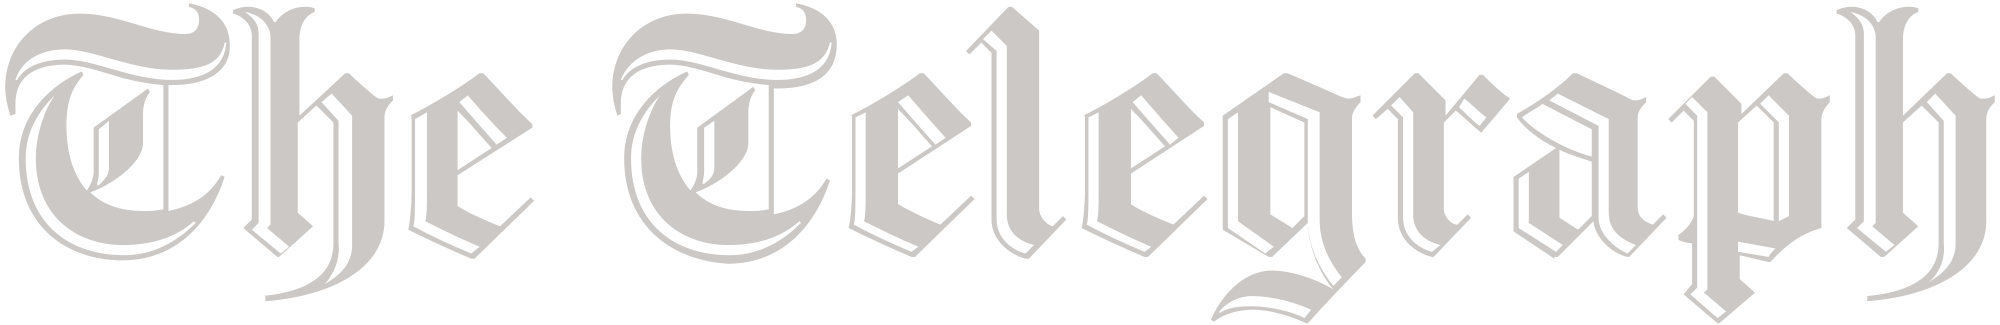 the telegraph logo1